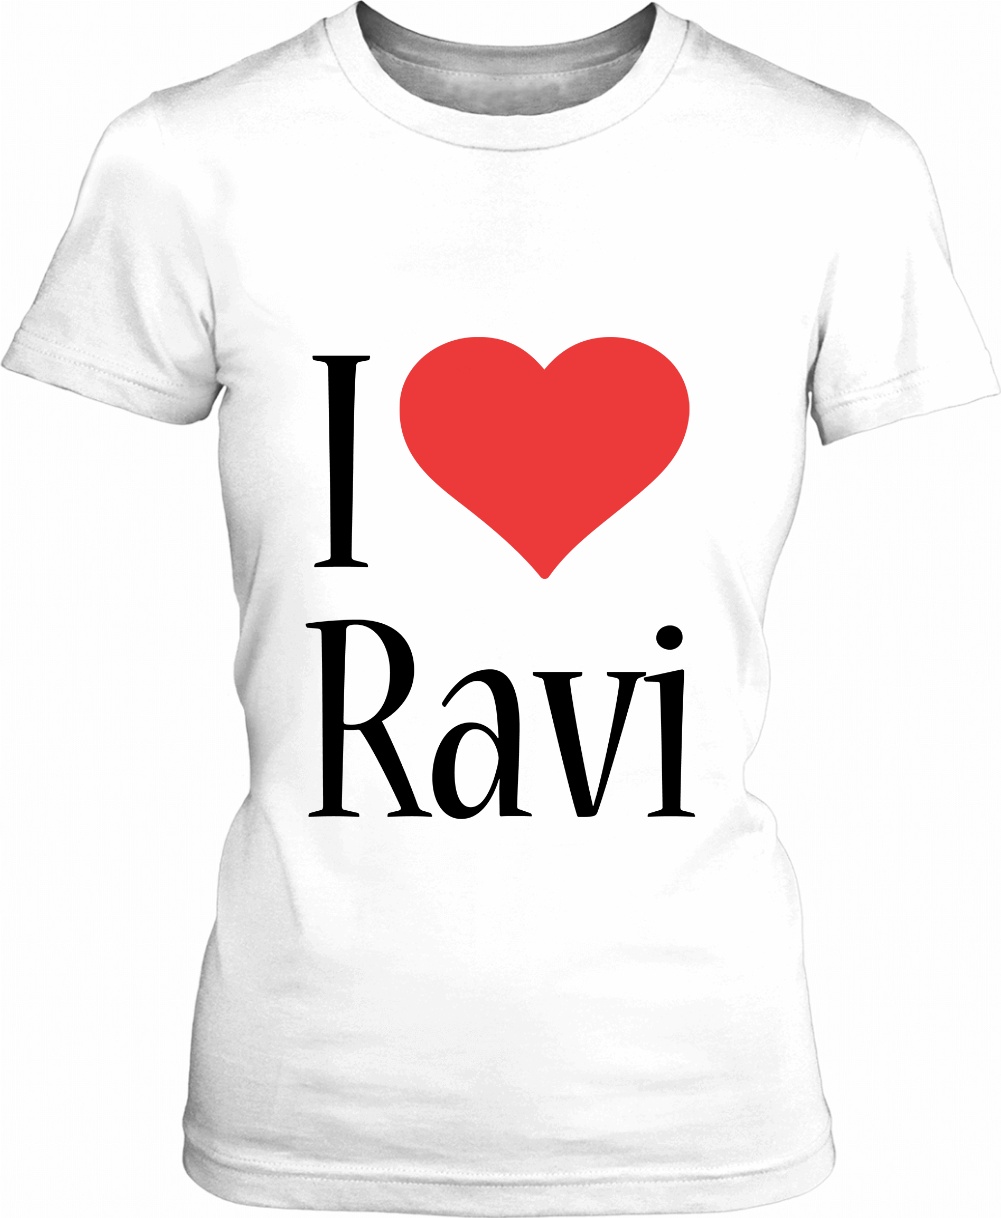 ravi love wallpaper,t shirt,kleidung,weiß,oben,text